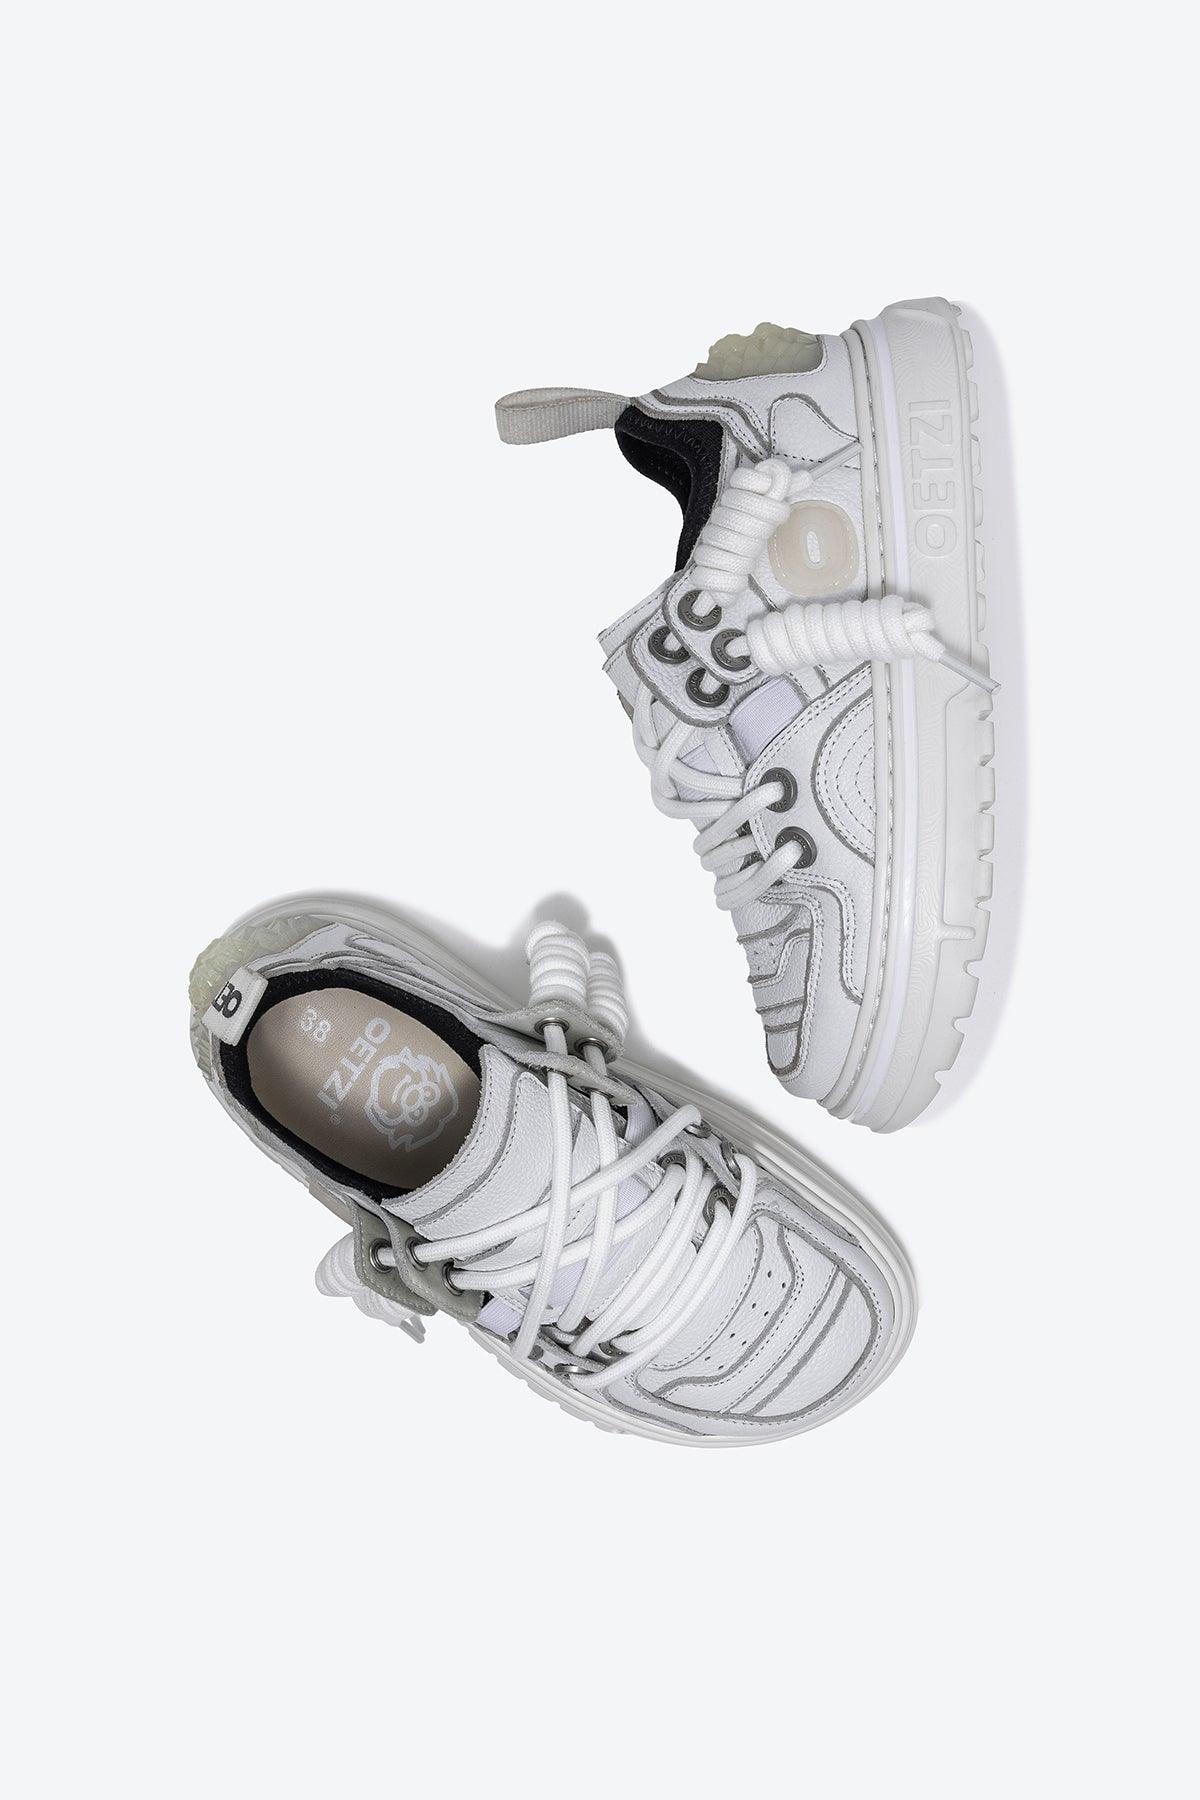 OETZIight Unisex Cowhide Sneakers For Women And Men - Oetziceman